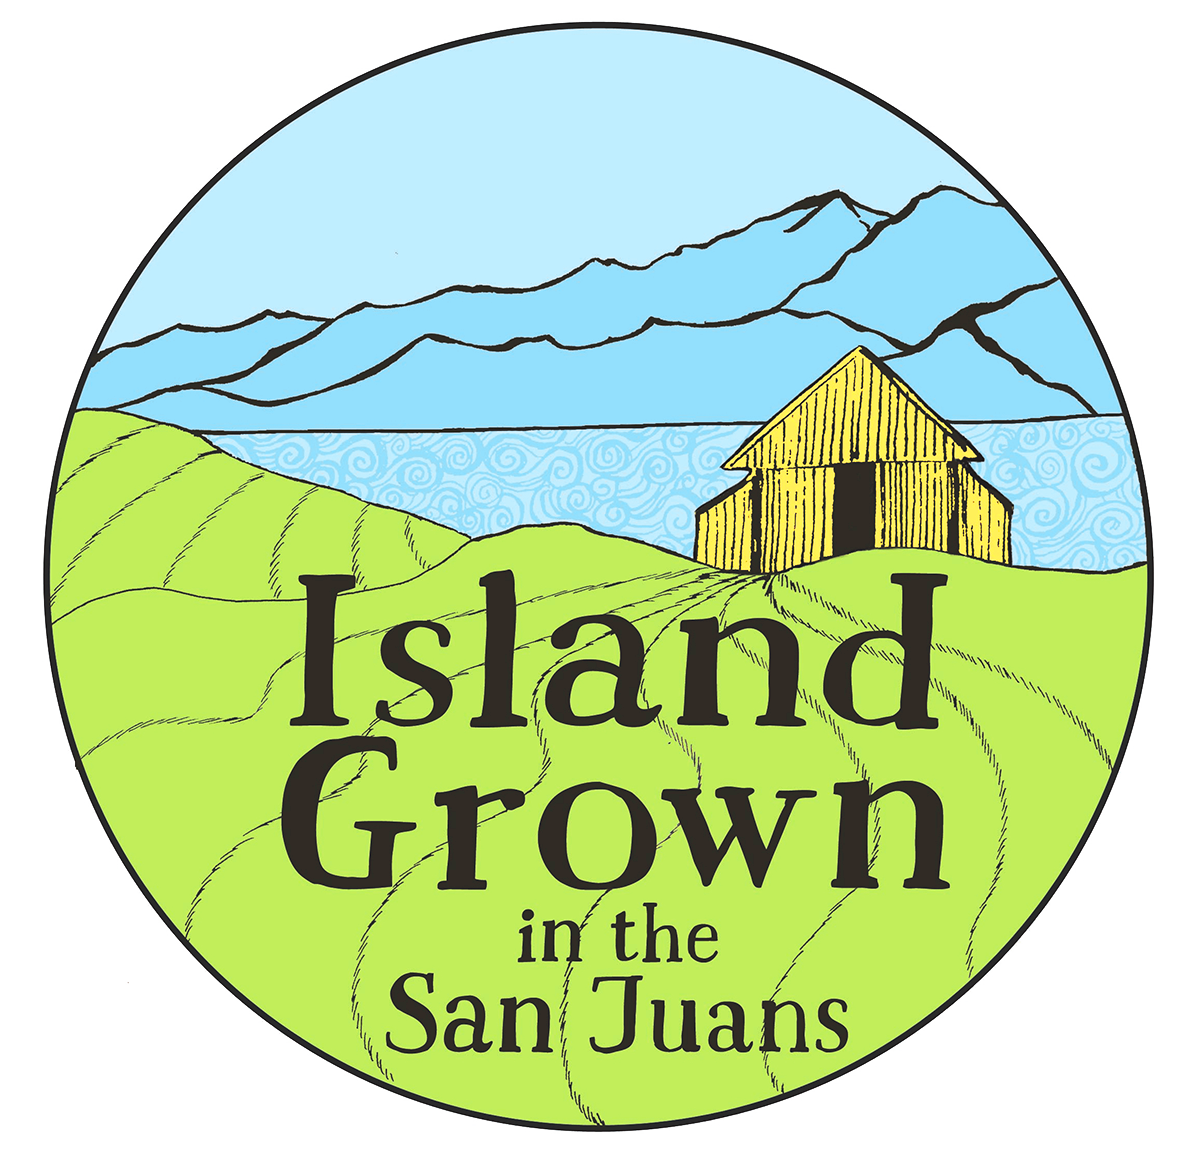 Island Grown in the San Juans